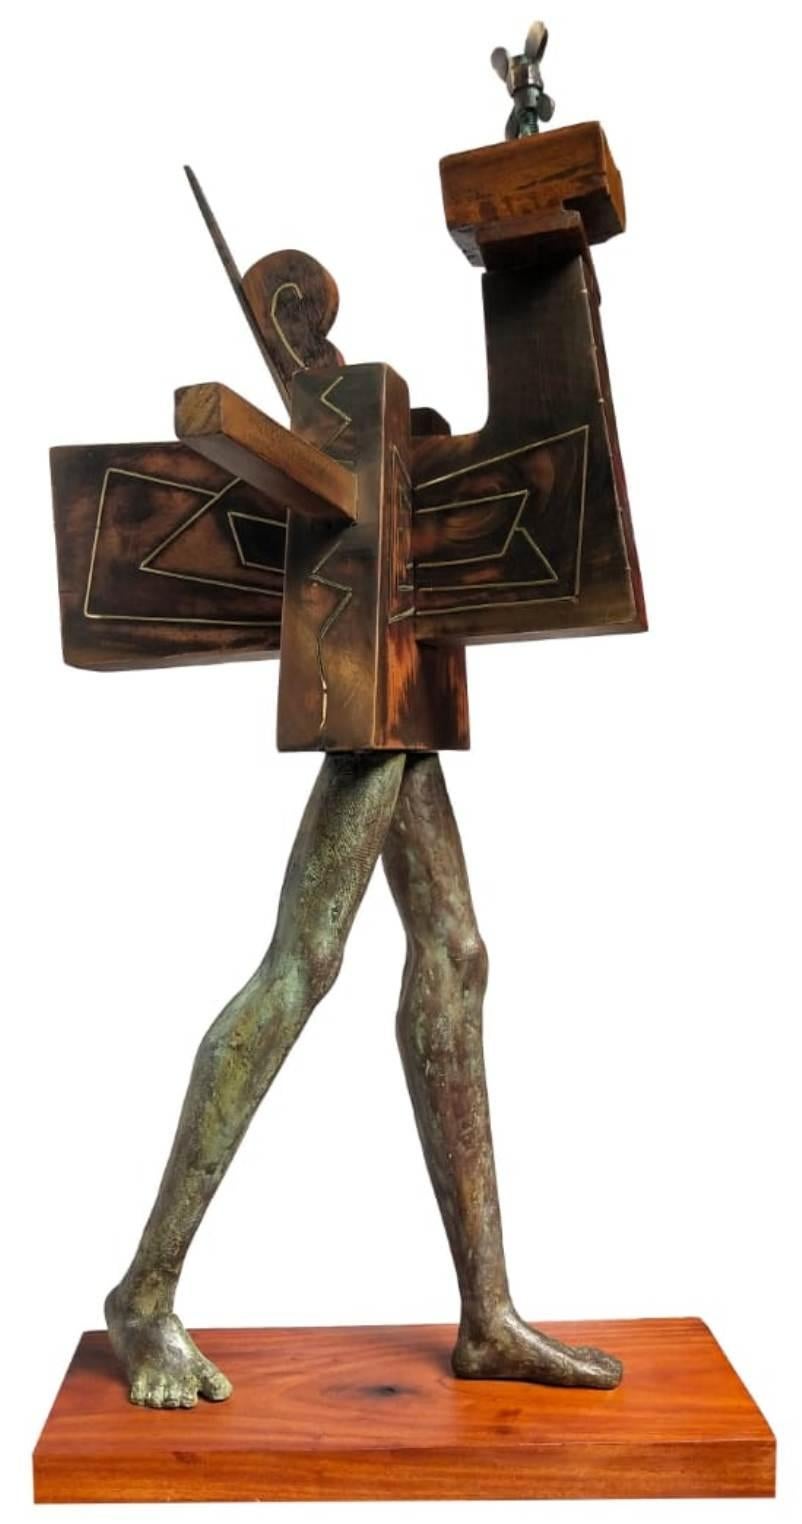 Rakesh Sadhak Figurative Sculpture - Upswing, Figurative, Wood, Iron & Metal by Contemporary Indian Artist "In Stock"